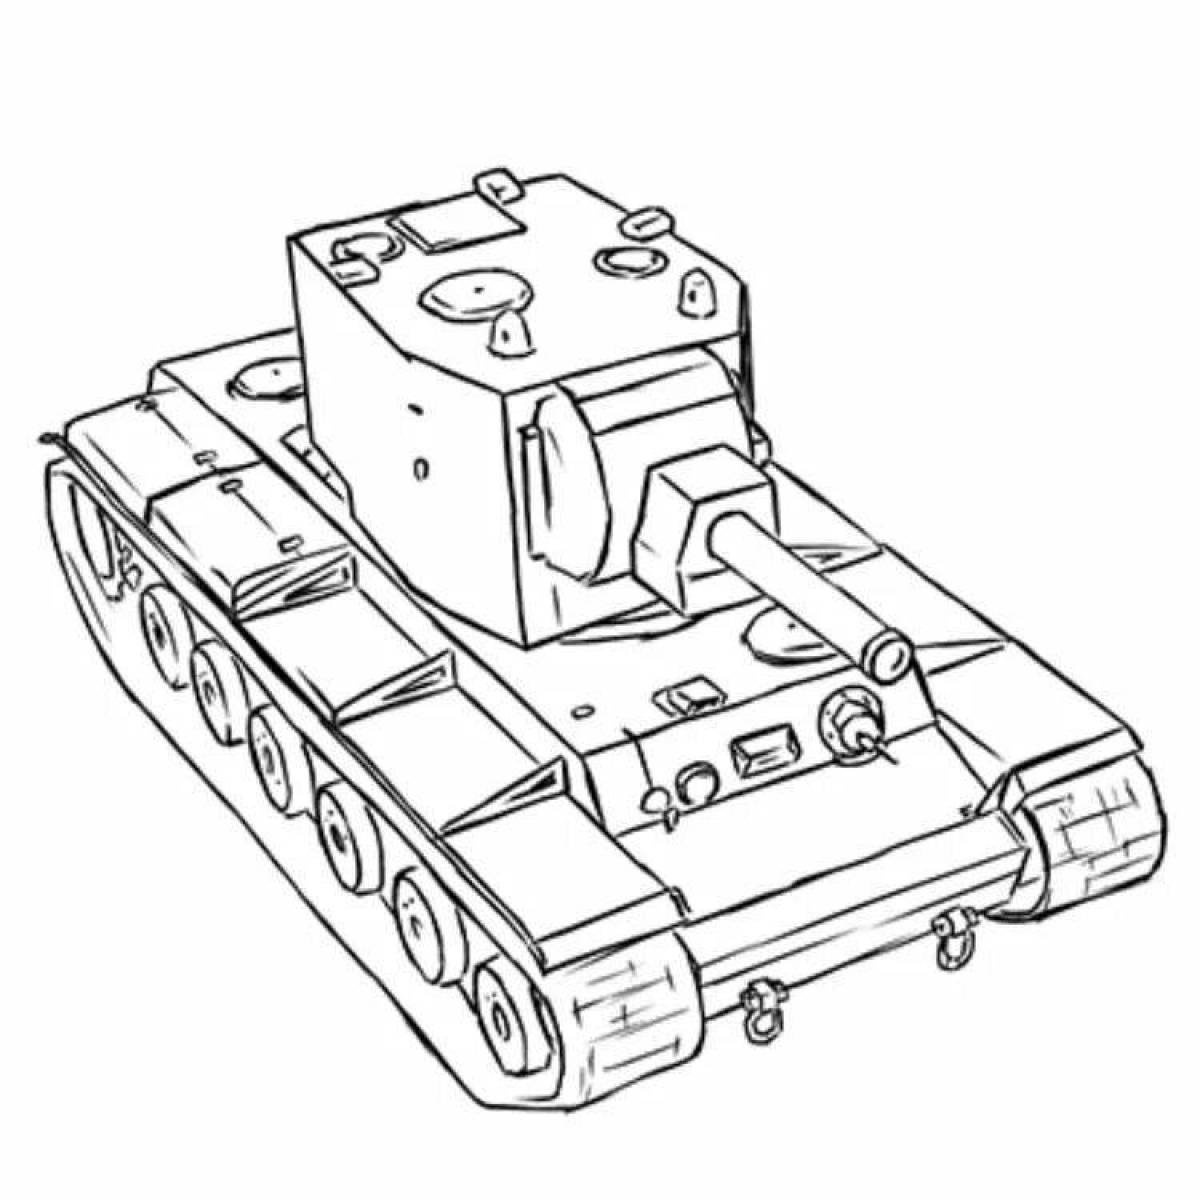 Раскраска танк кв-2